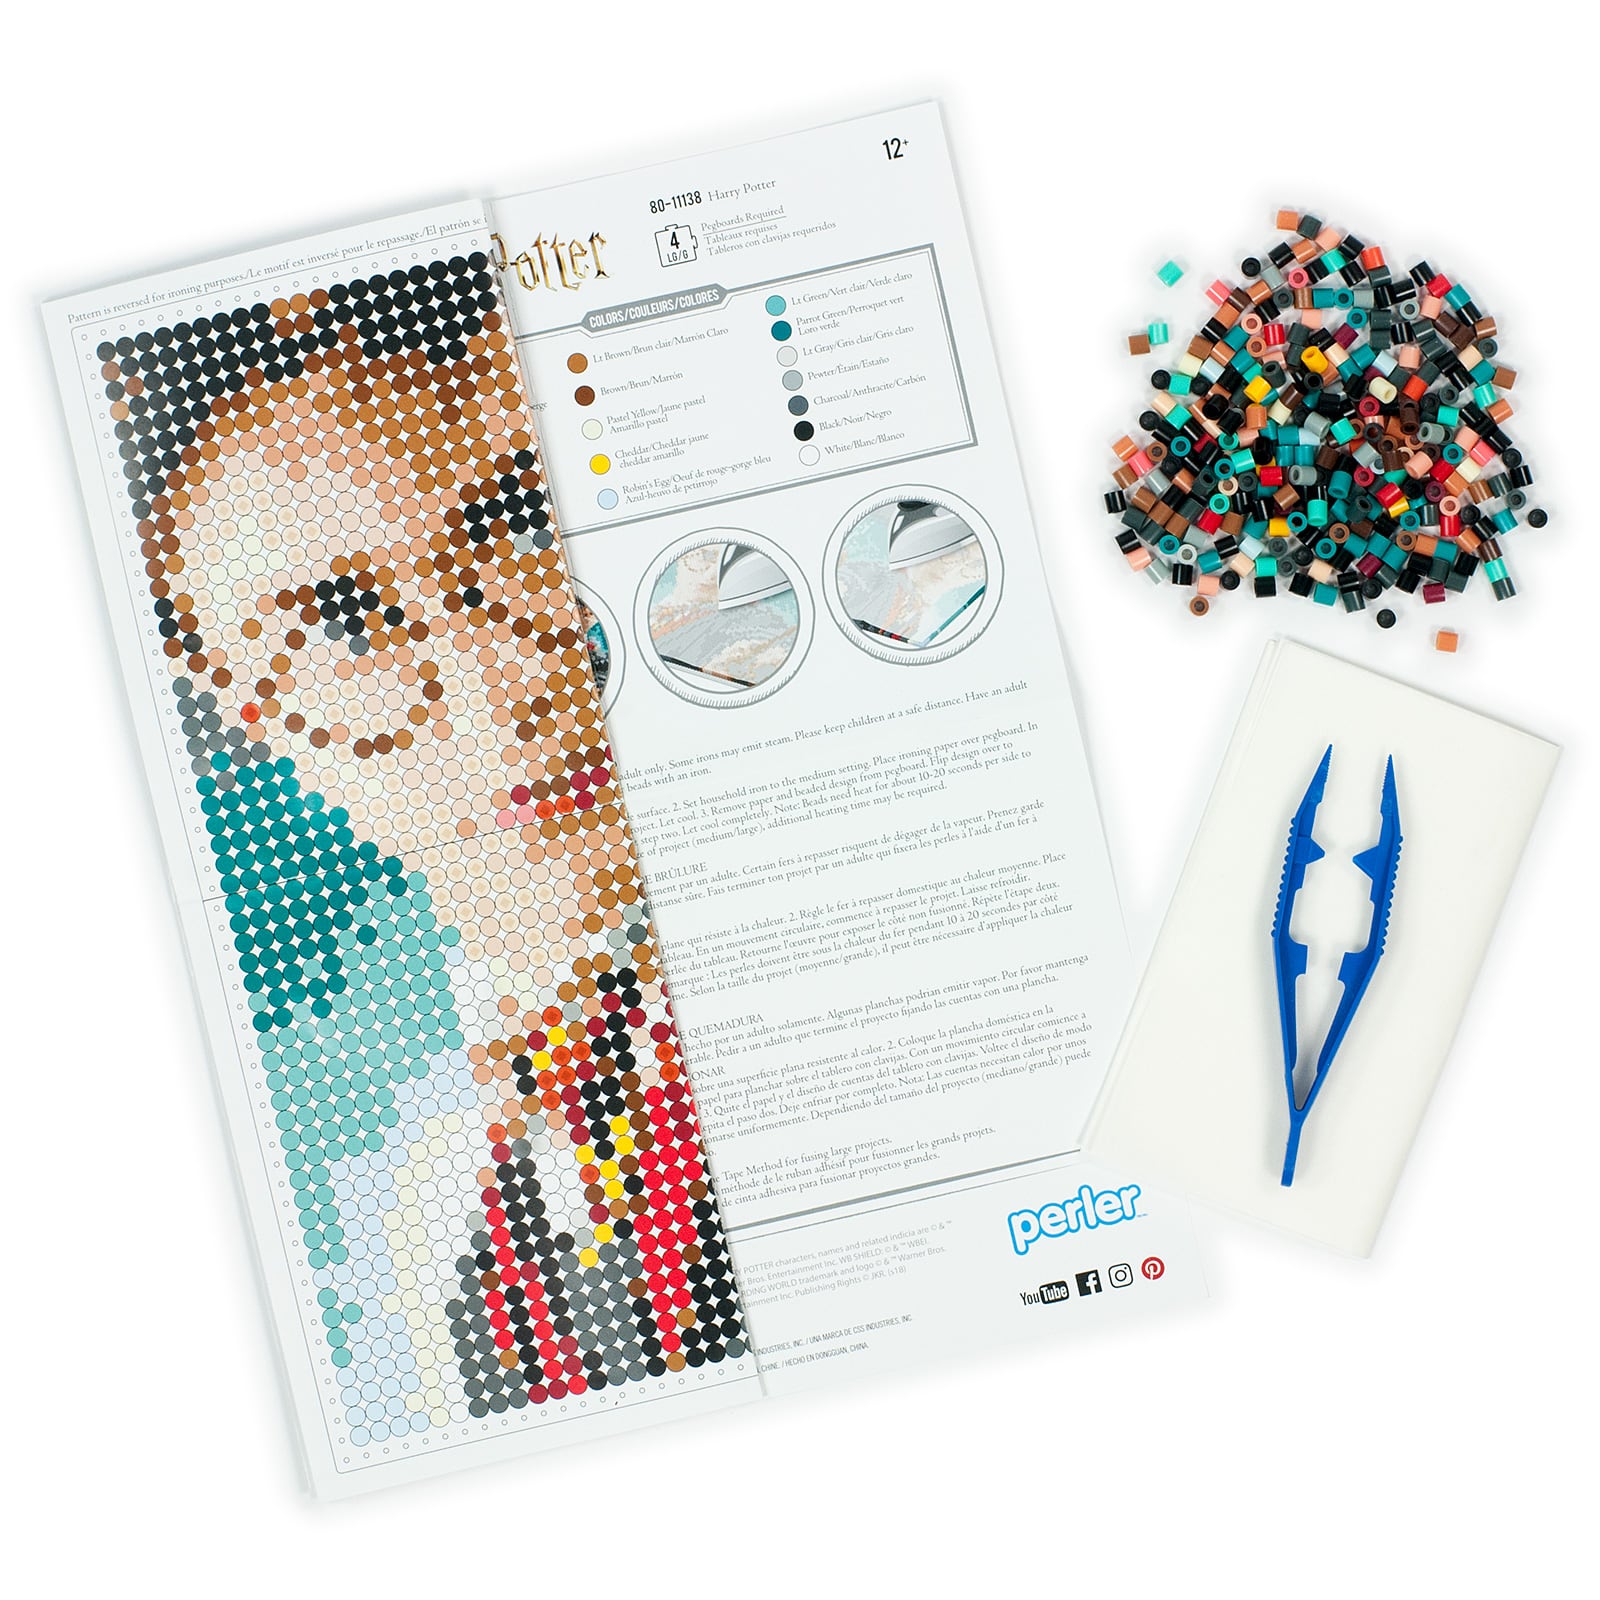 Perler&#xAE; Harry Potter&#x2122; Beads &#x26; Pattern Kit